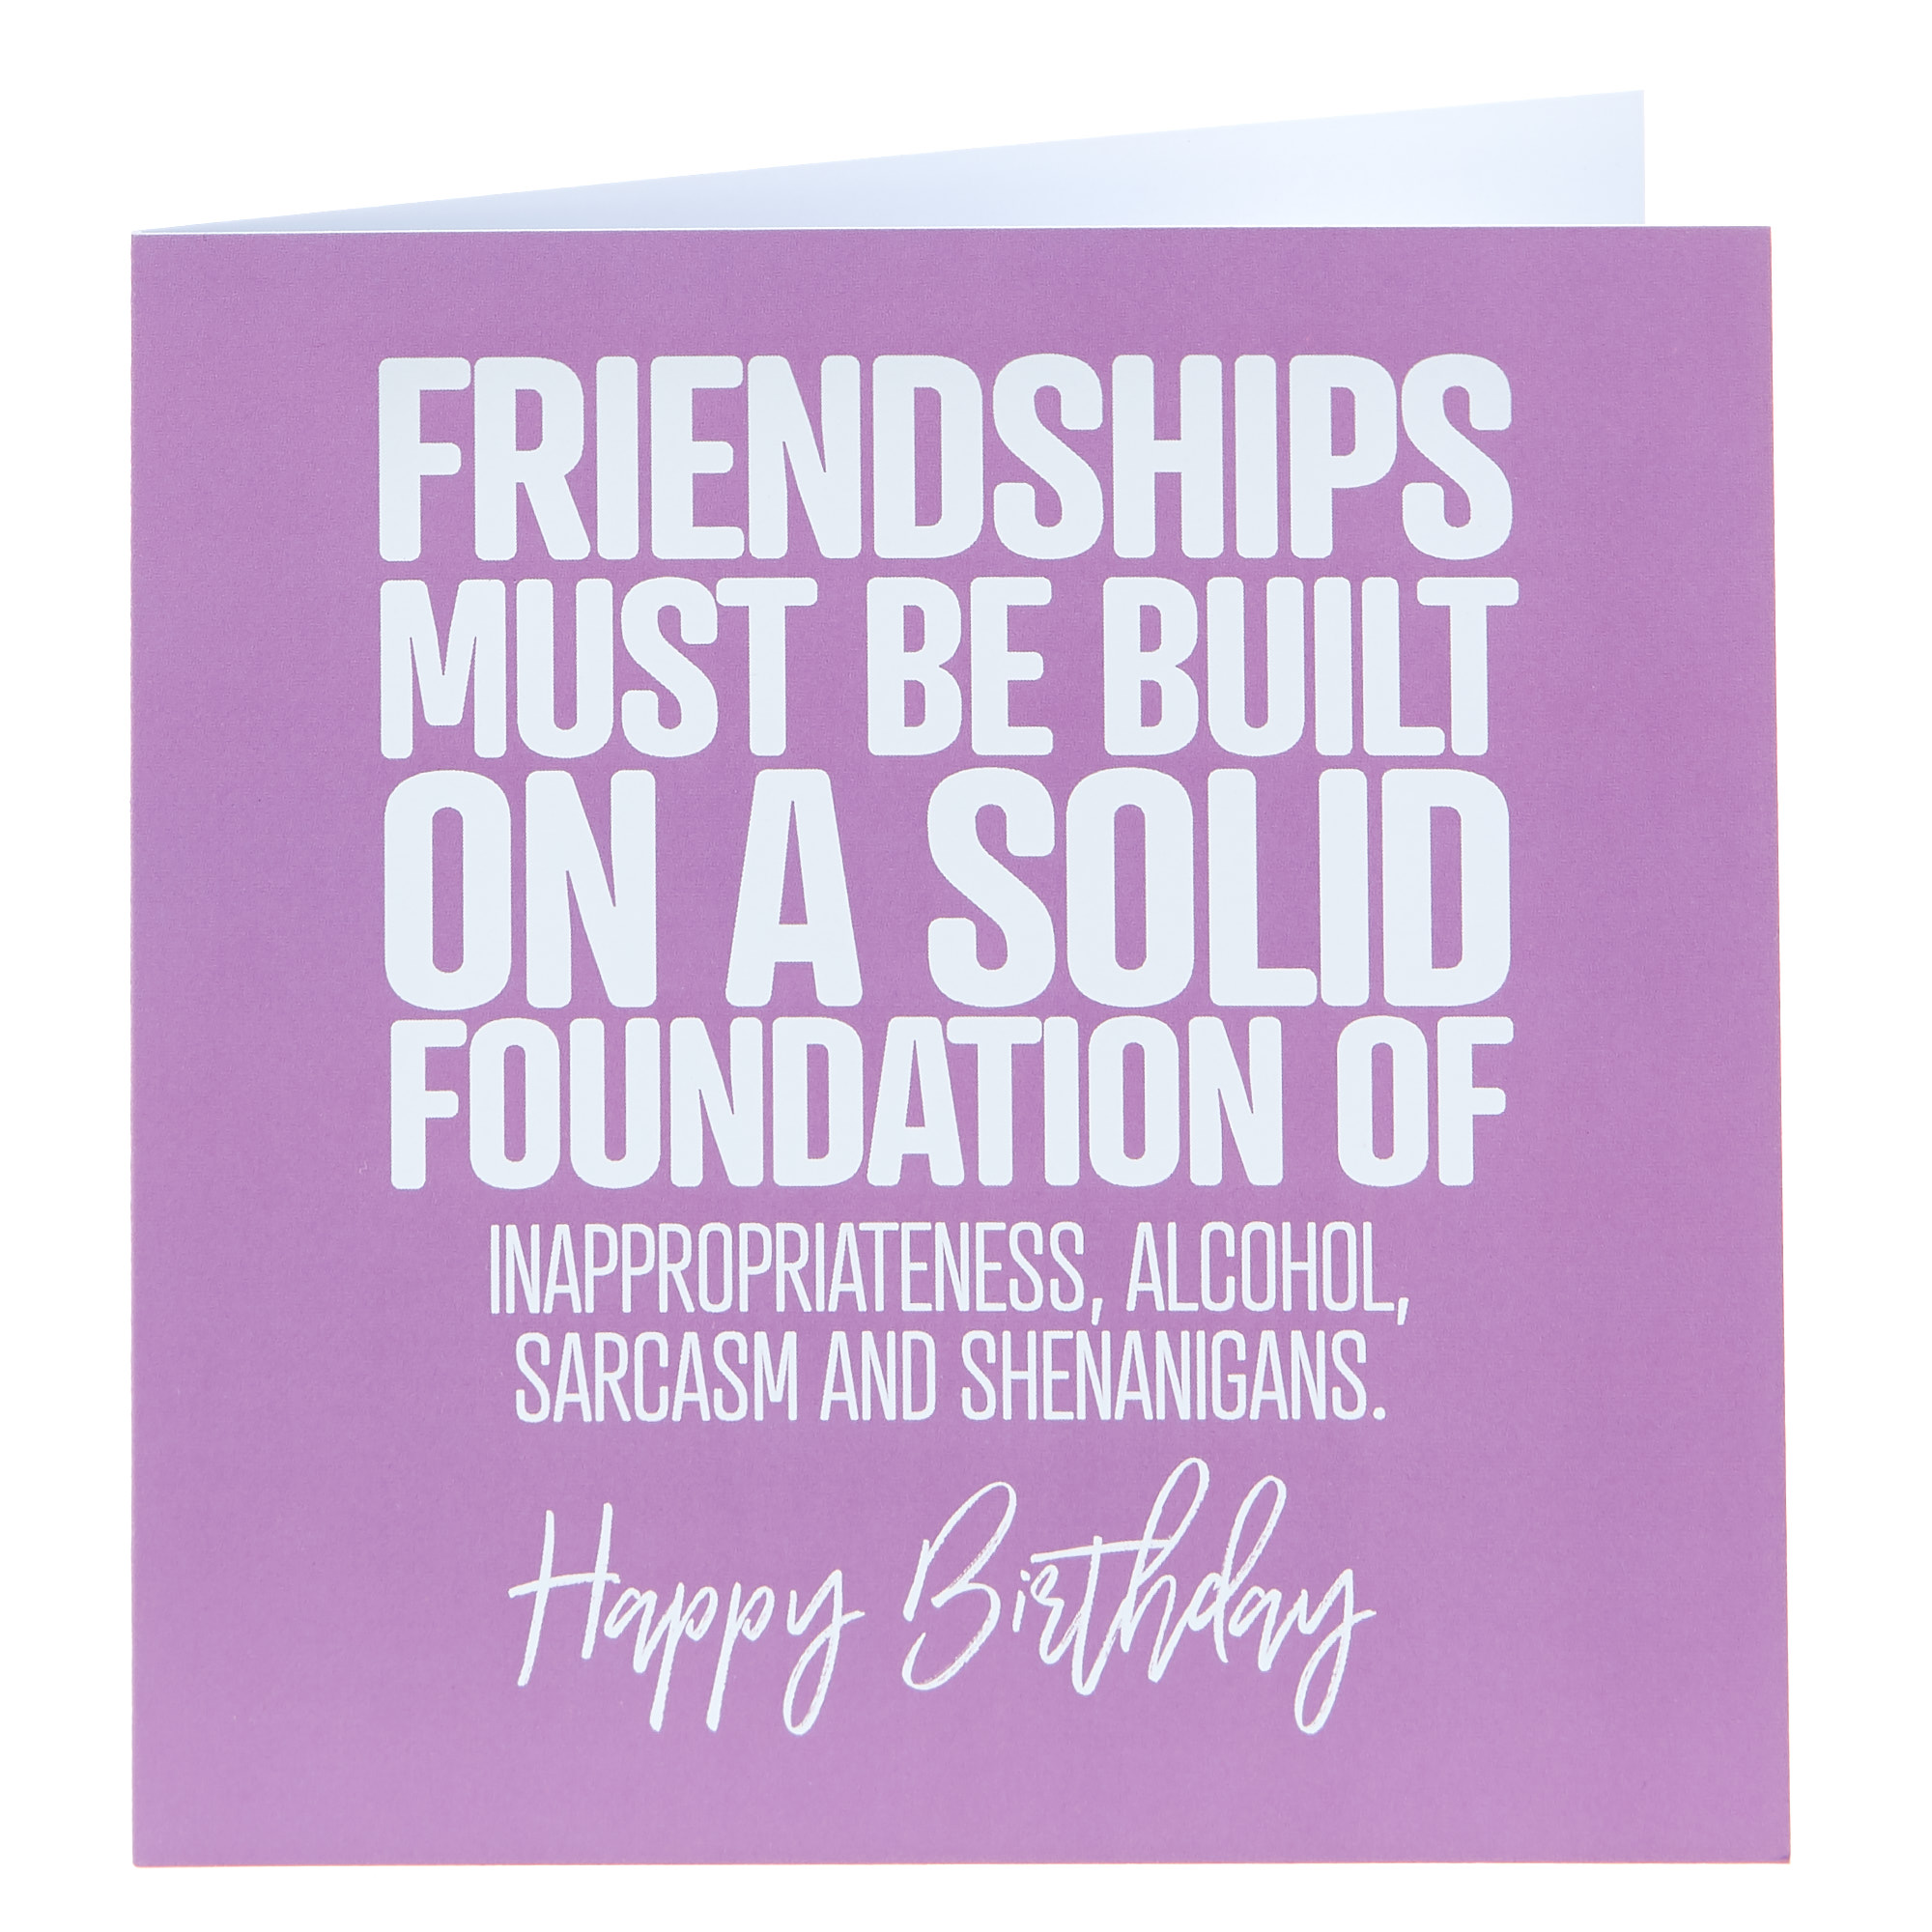 Punk Birthday Card - A Solid Foundation Of...